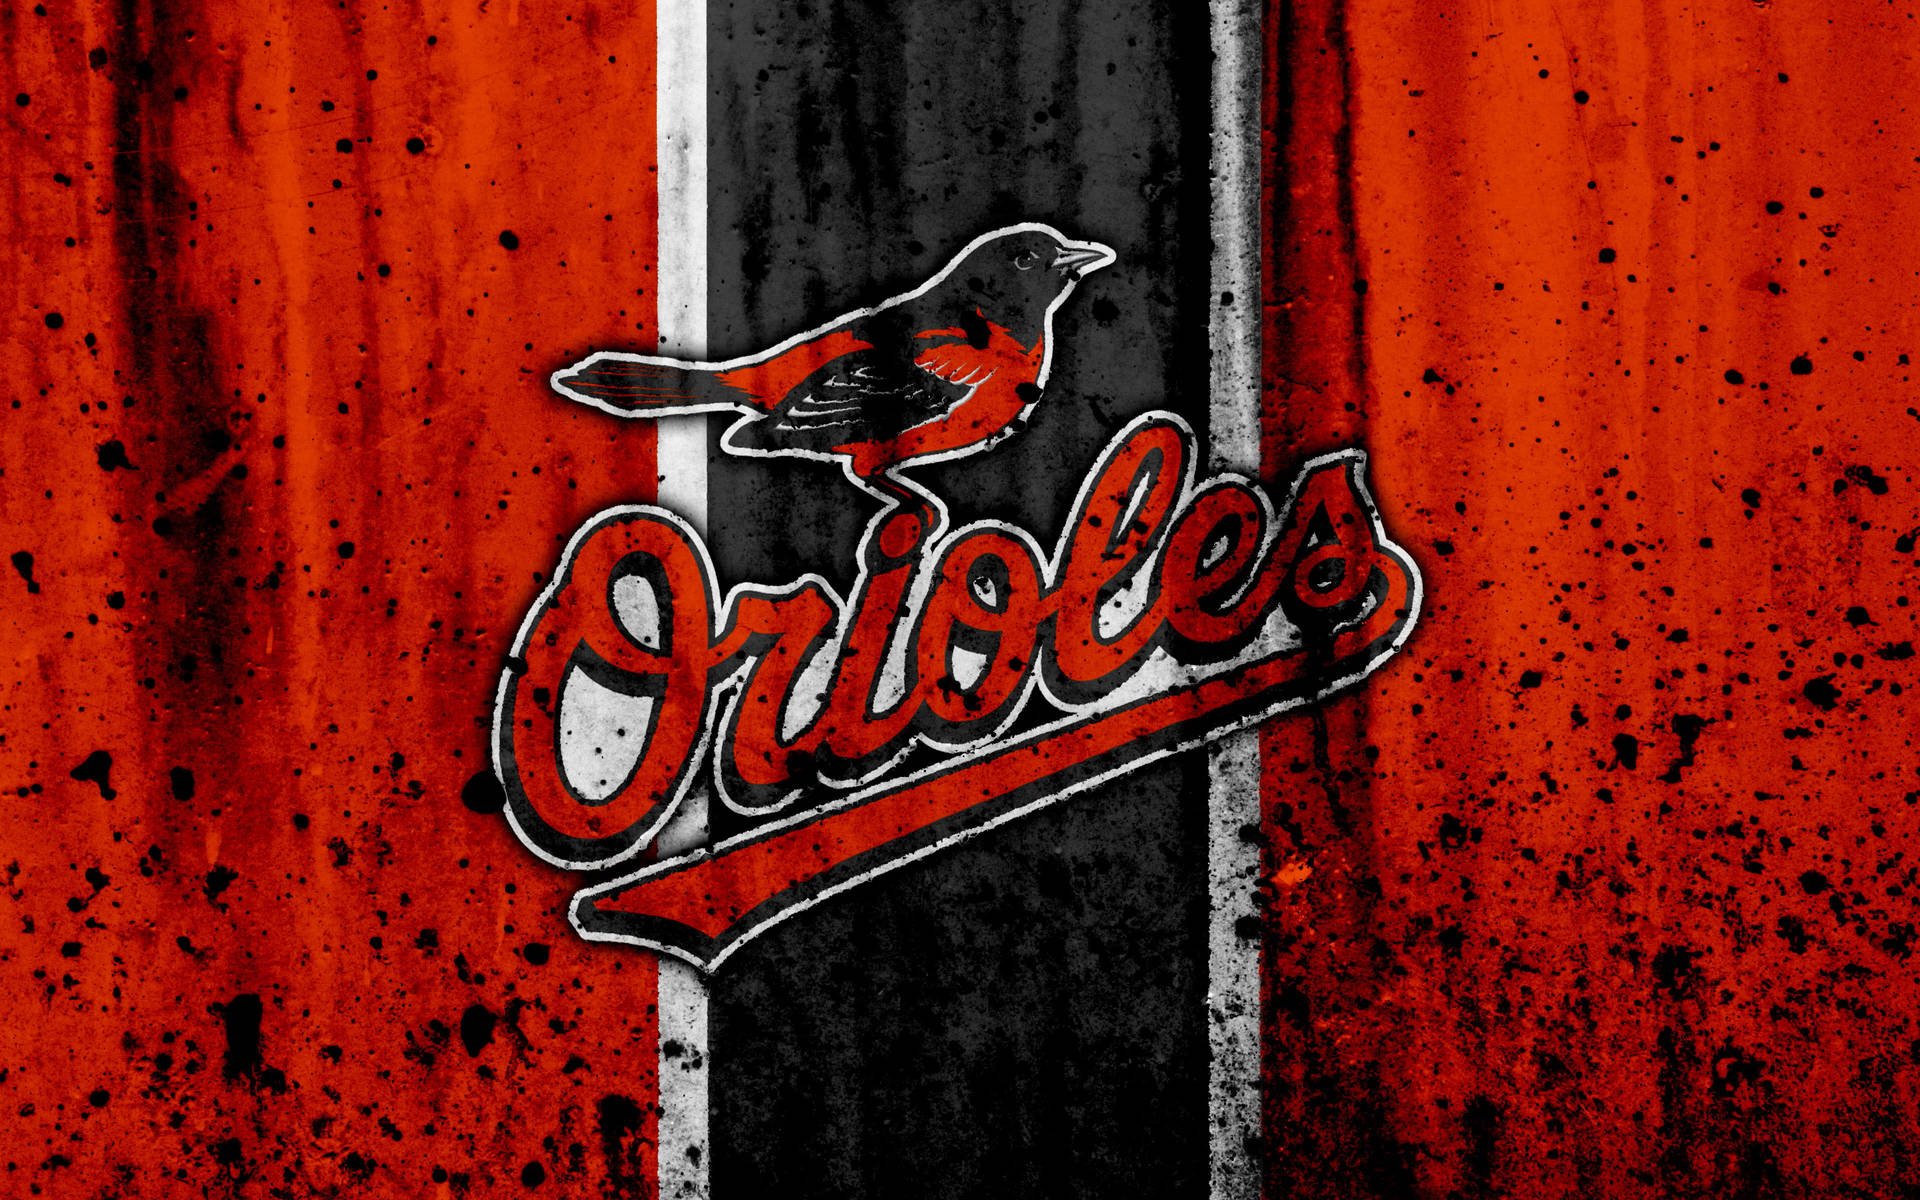 Baltimore Orioles Grunge Stone